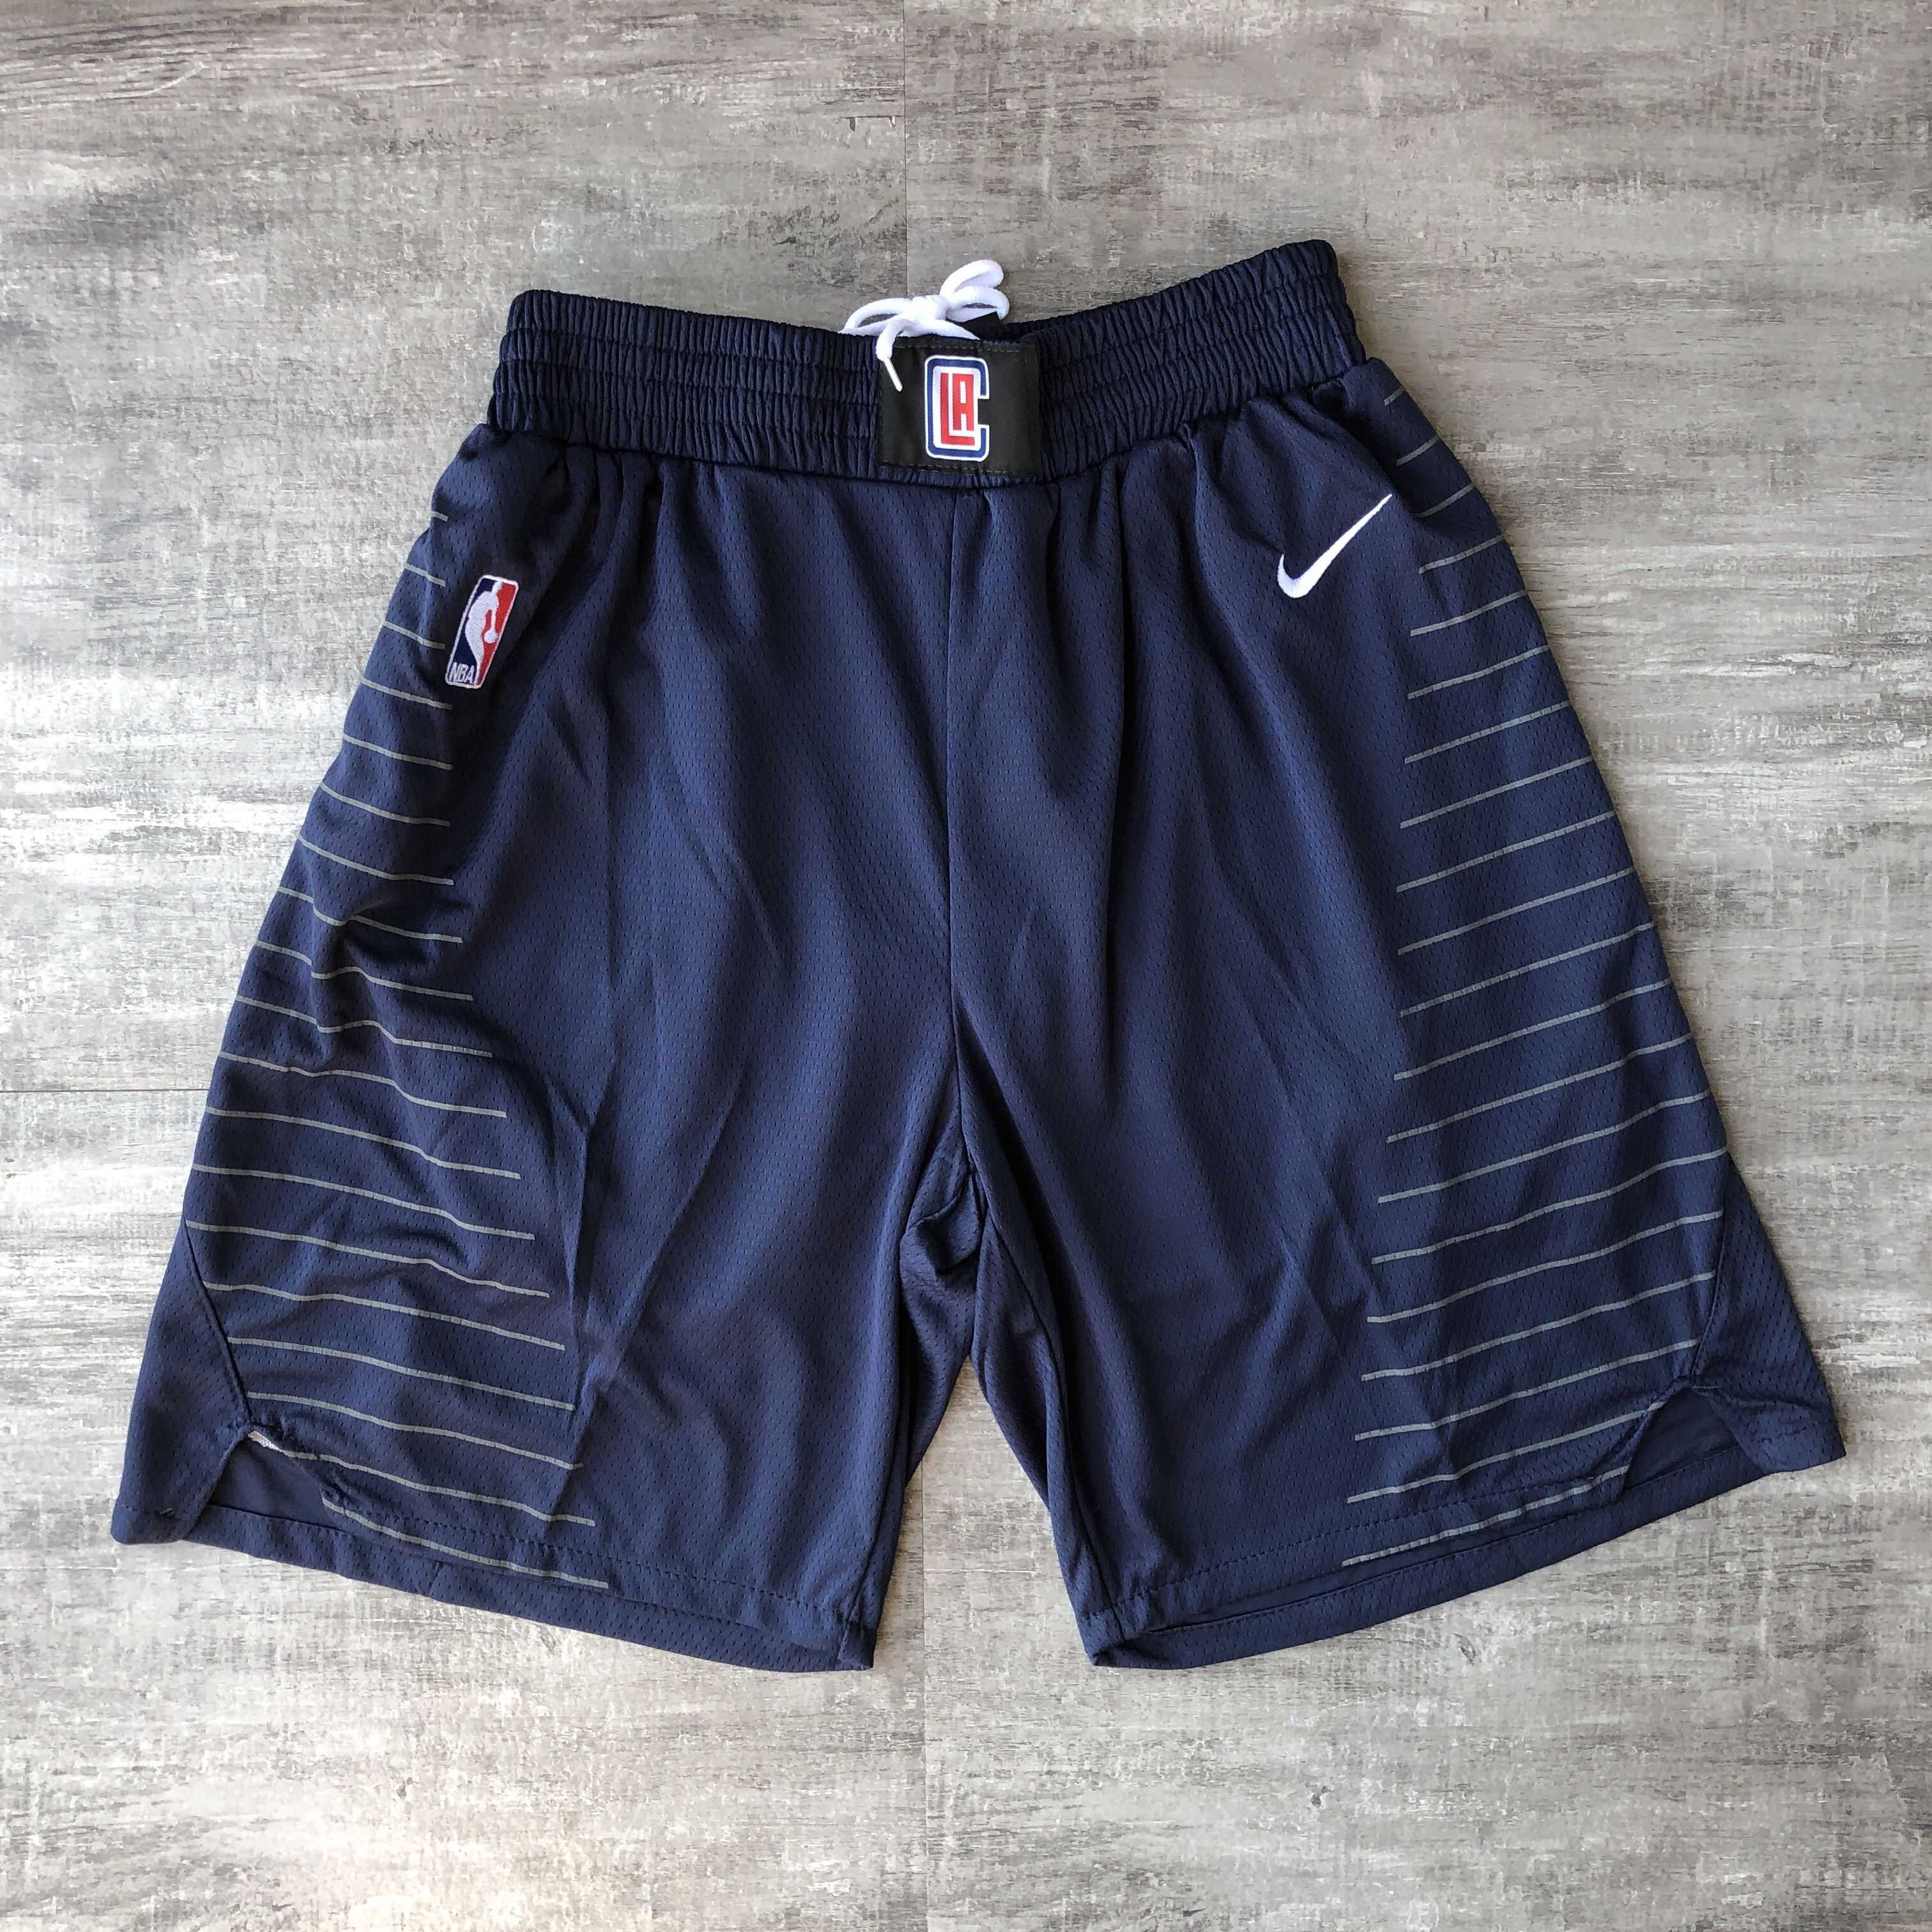 Men NBA Los Angeles Clippers navy blue Nike Shorts 0416